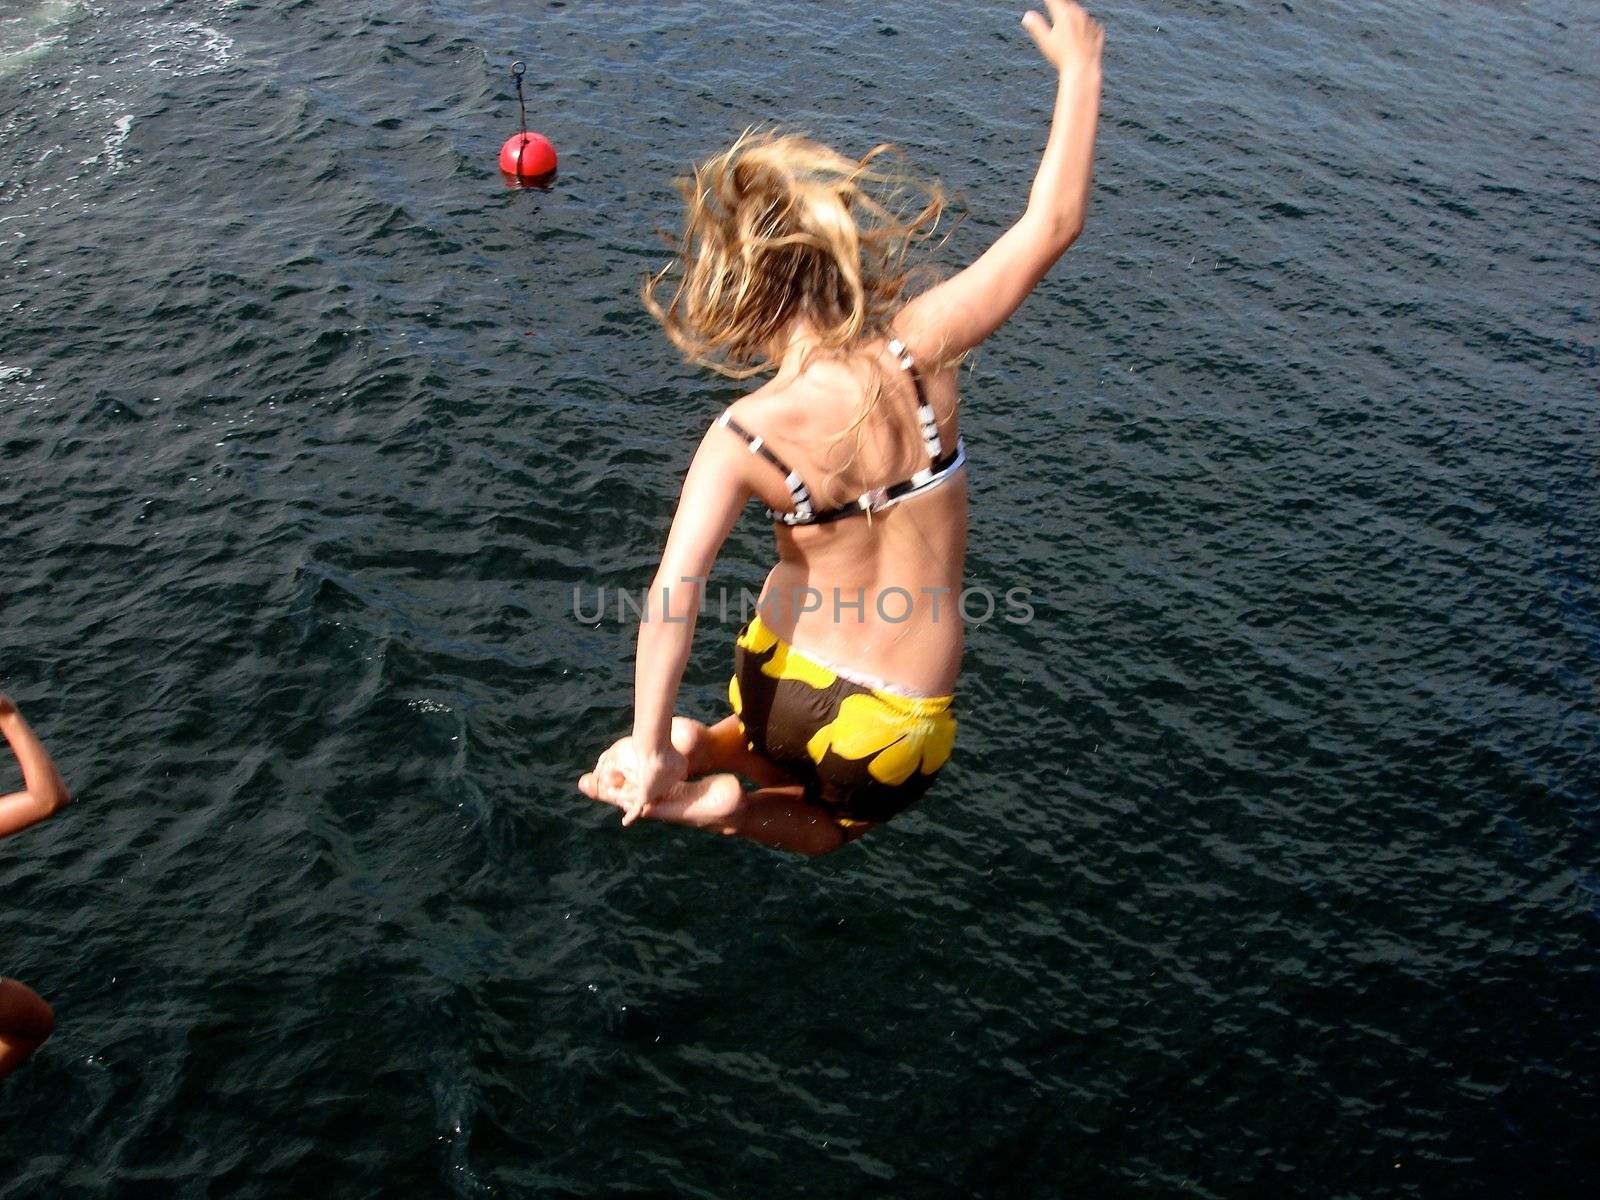 children diving into the sea. Please note: No negative use allowed.